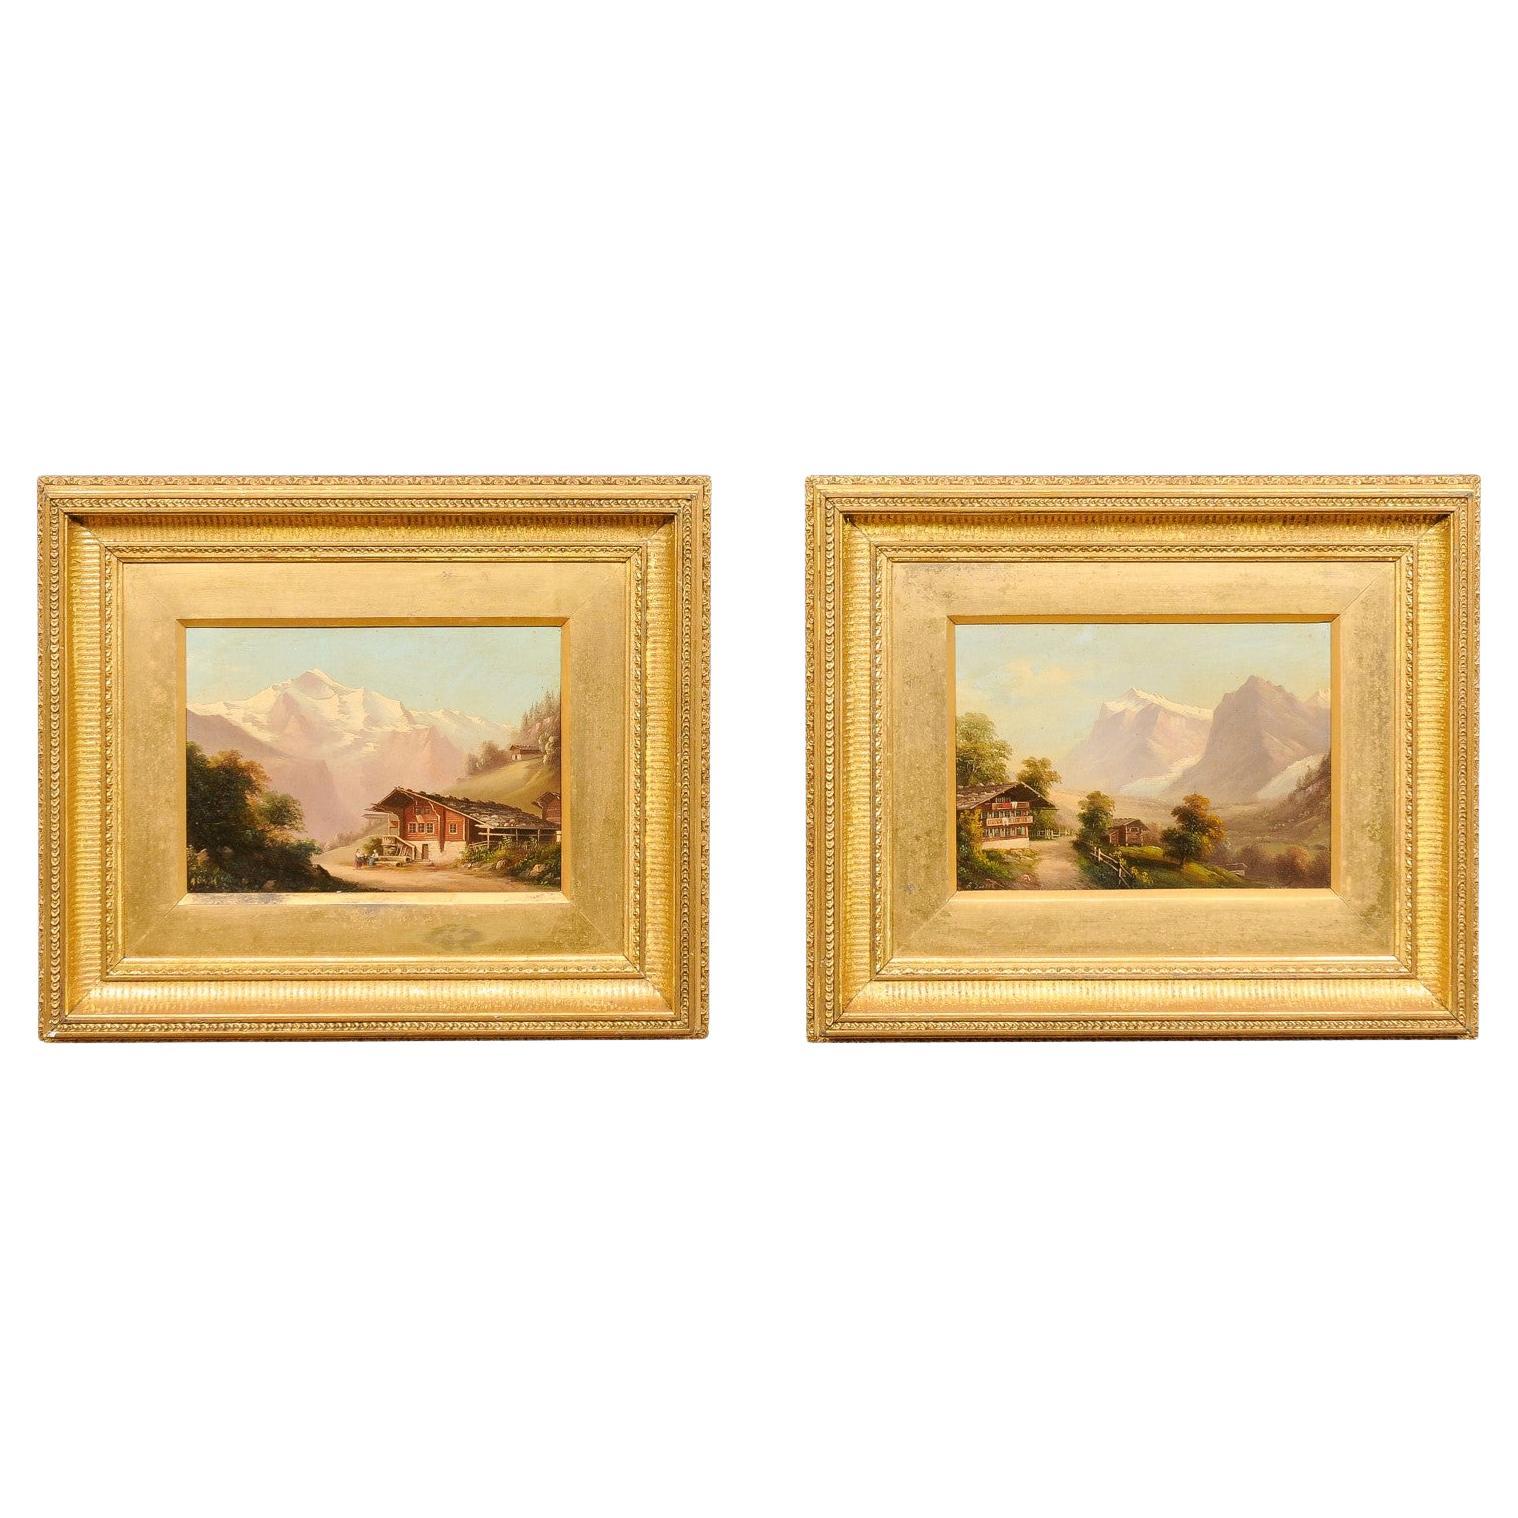 Paar vergoldete gerahmte Ölgemälde auf Karton-Landschaftsgemälde mit Bergsszenen, 19. Jahrhundert